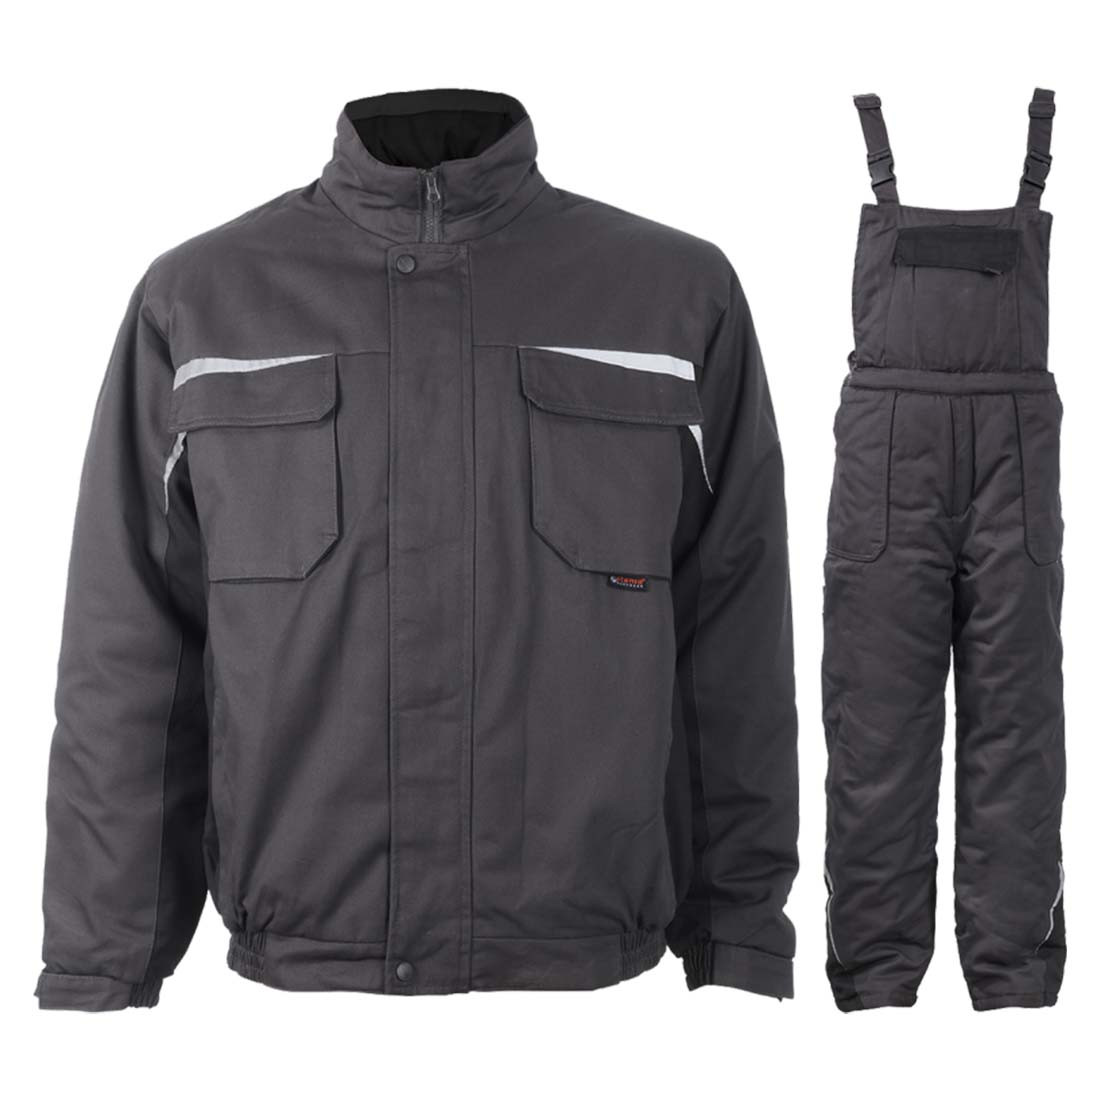 Kastor Winter Water Resistant Suit - Safetywear